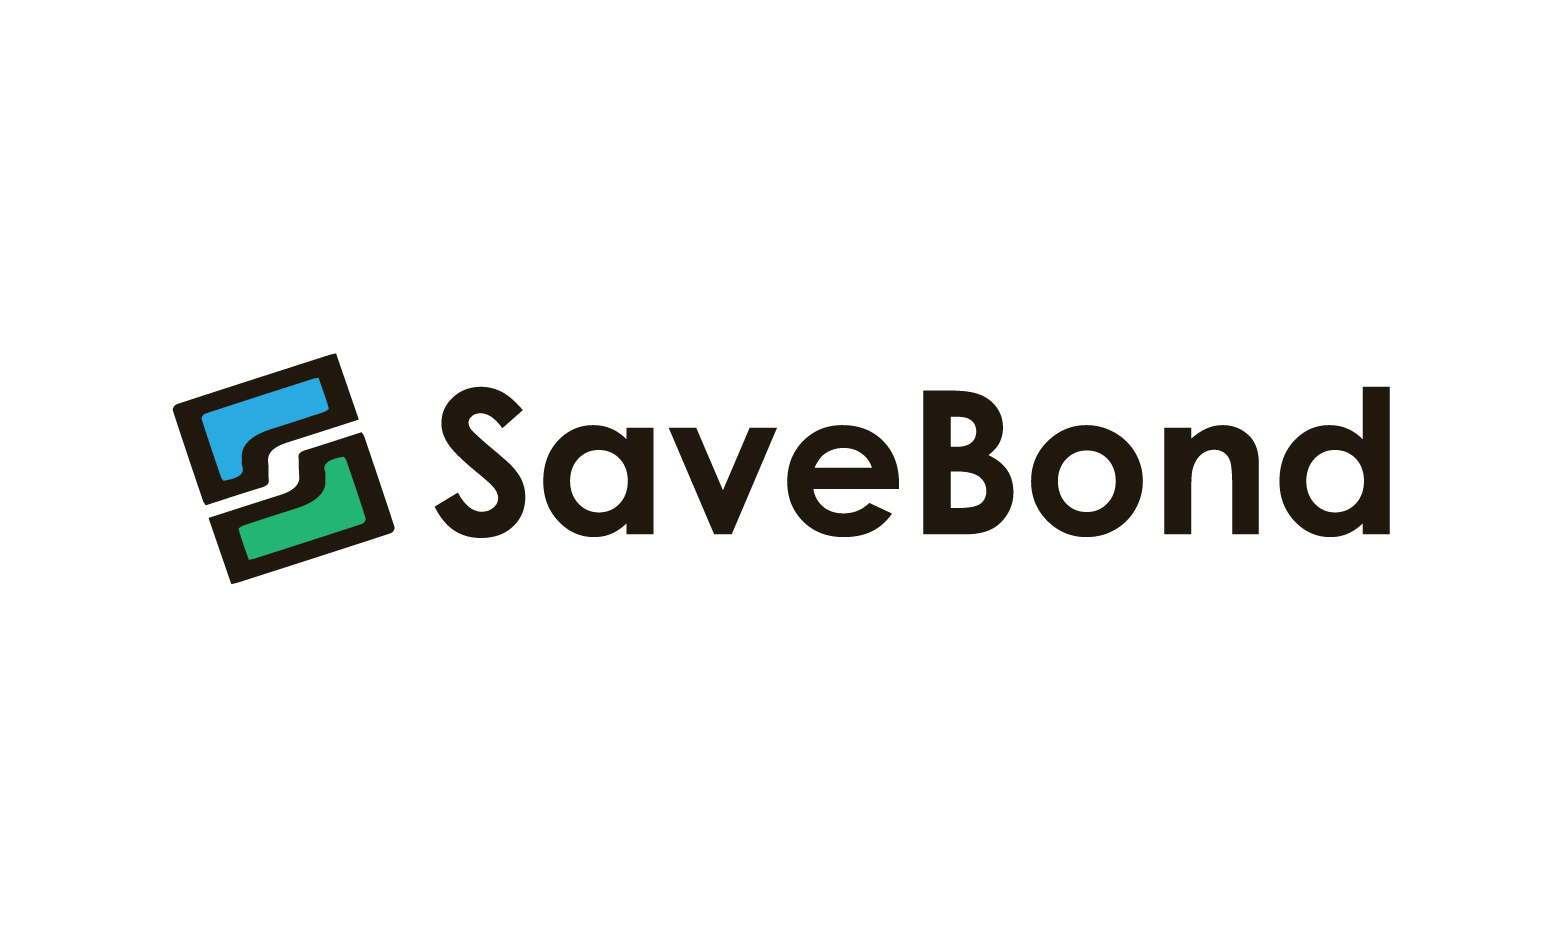 SaveBond.com - Creative brandable domain for sale